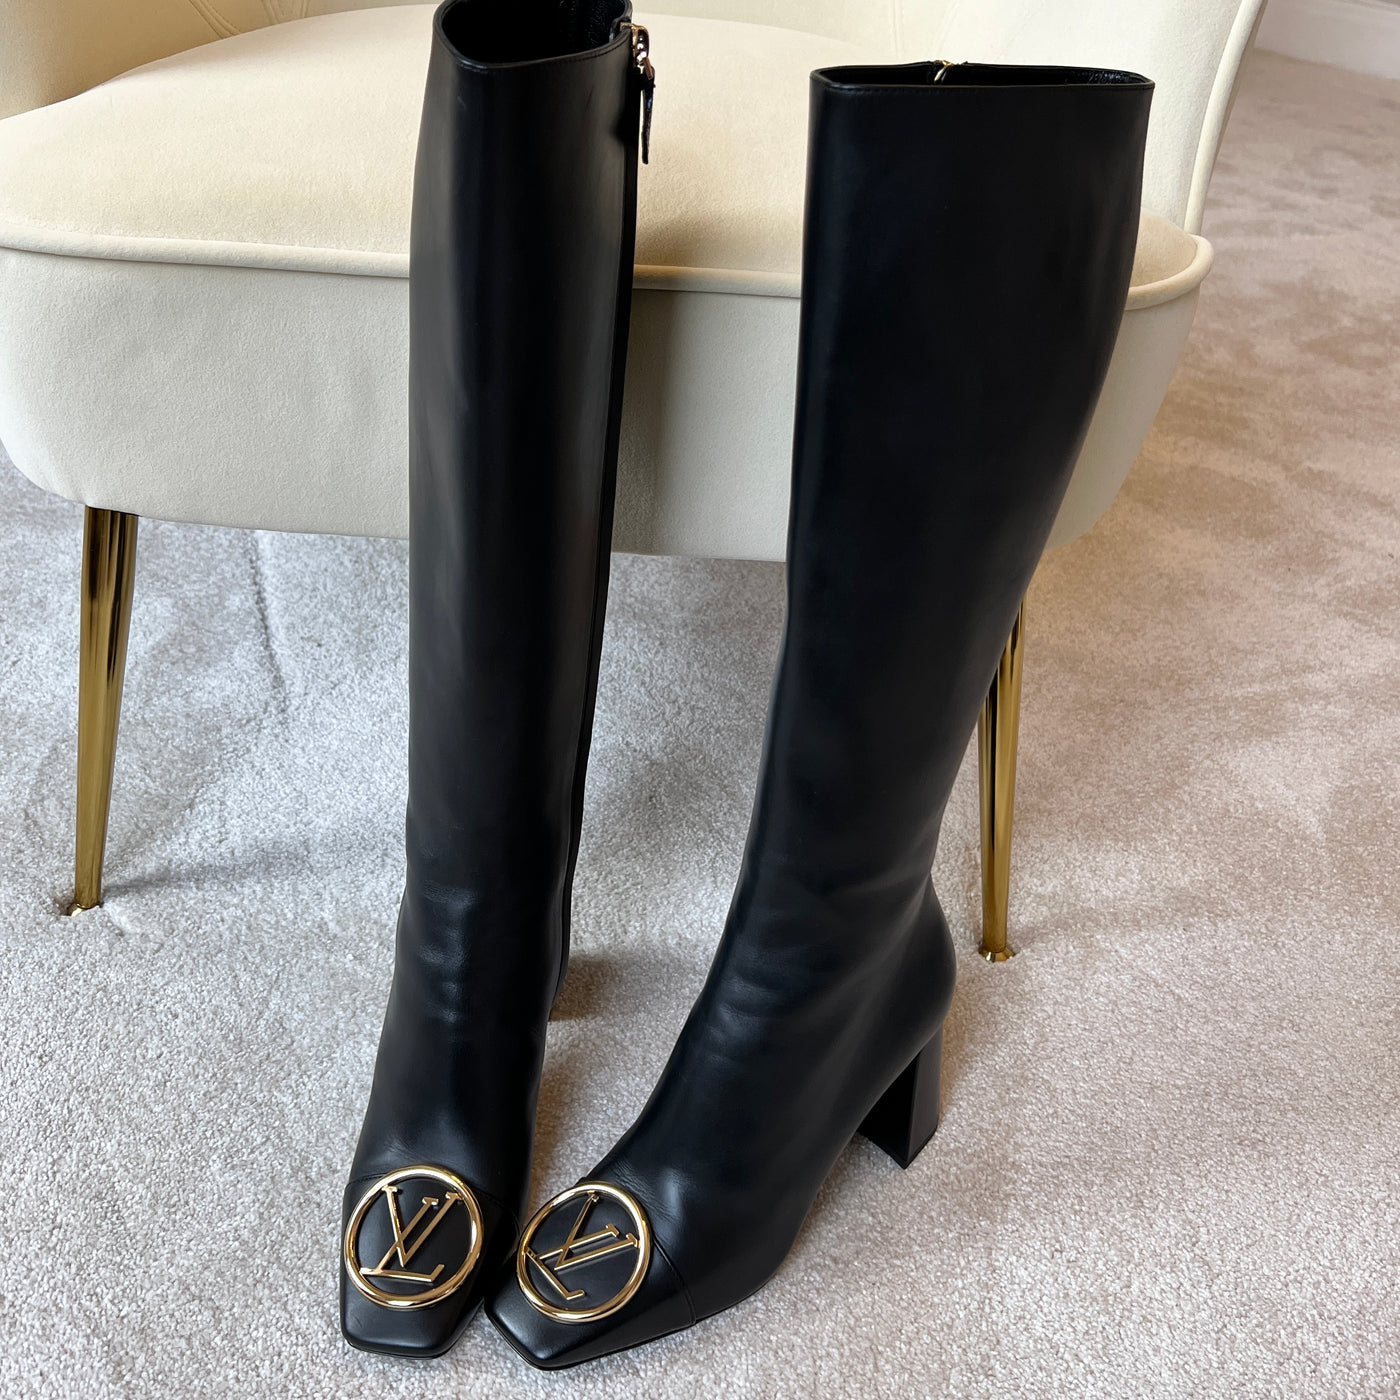 Cập nhật với hơn 61 louis vuitton heels boots tuyệt vời nhất  trieuson5